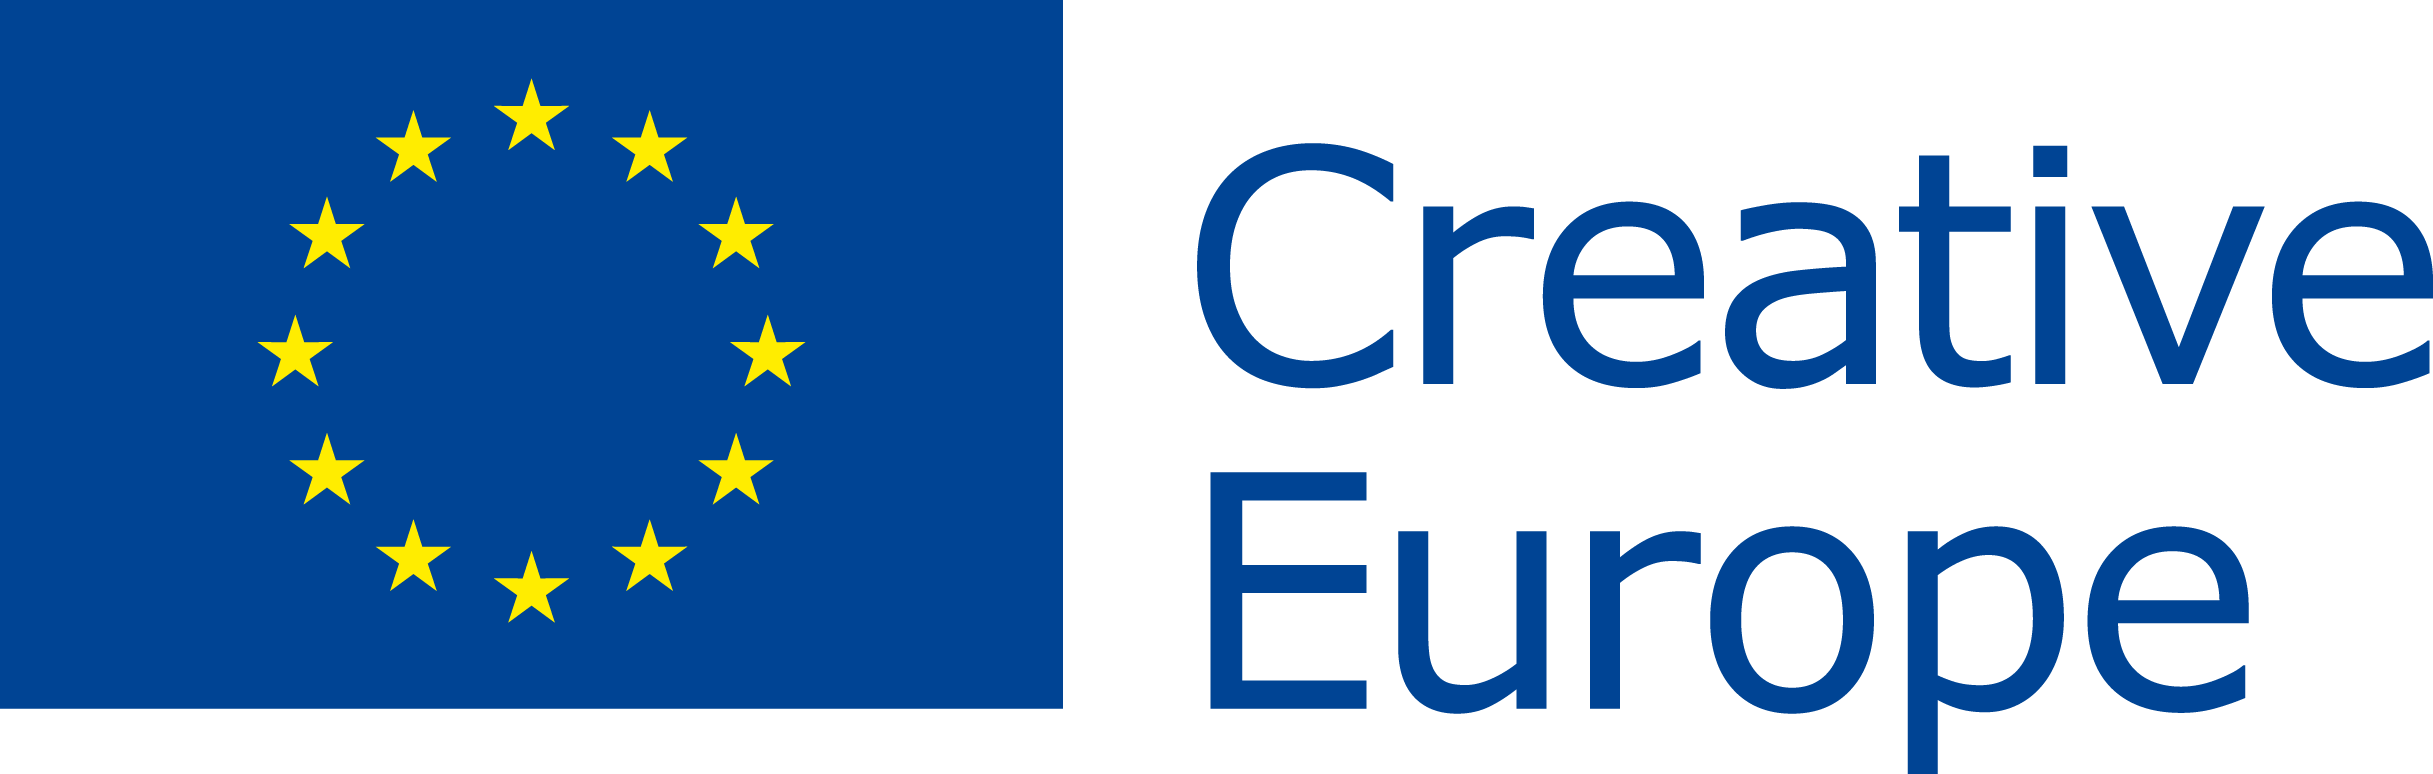 Creative_Europe_logo.png